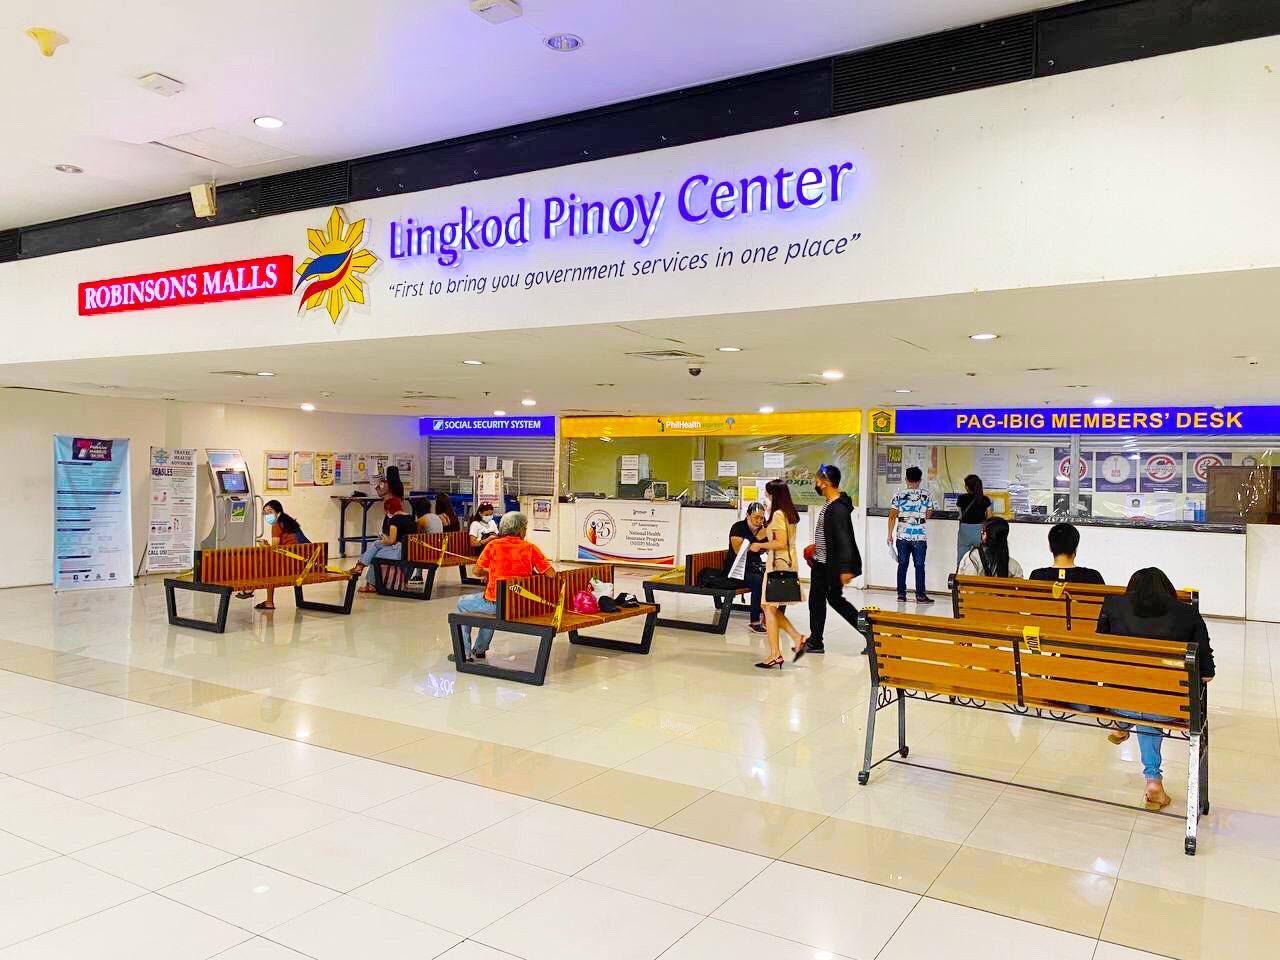 Robinsons Malls Lingkod Pinoy Center: Lifeline to millions of Filipino workers